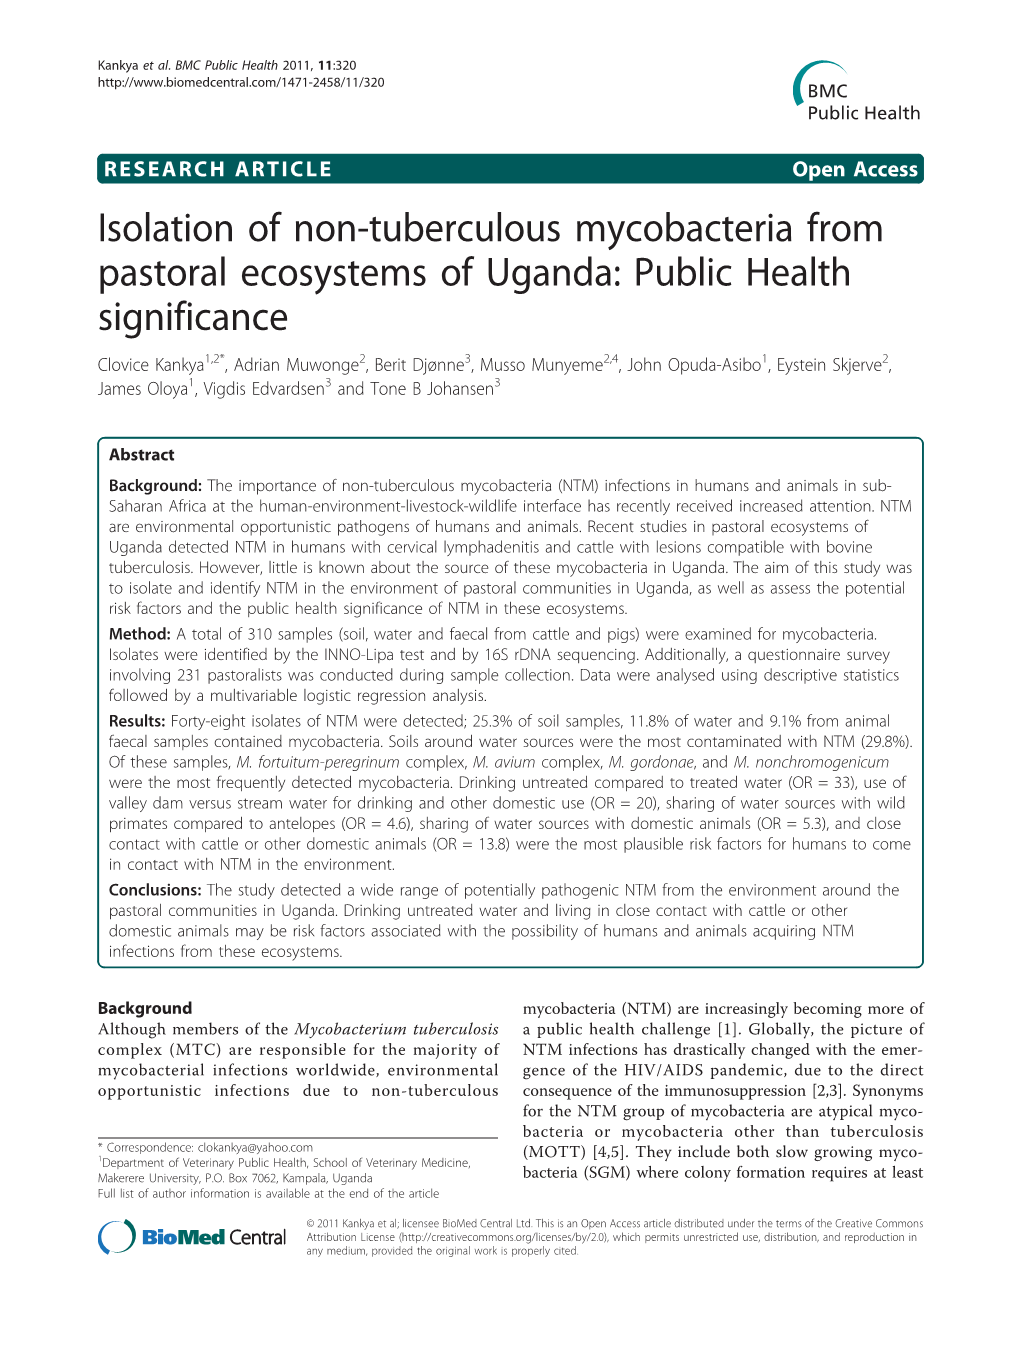 Isolation of Non-Tuberculous Mycobacteria